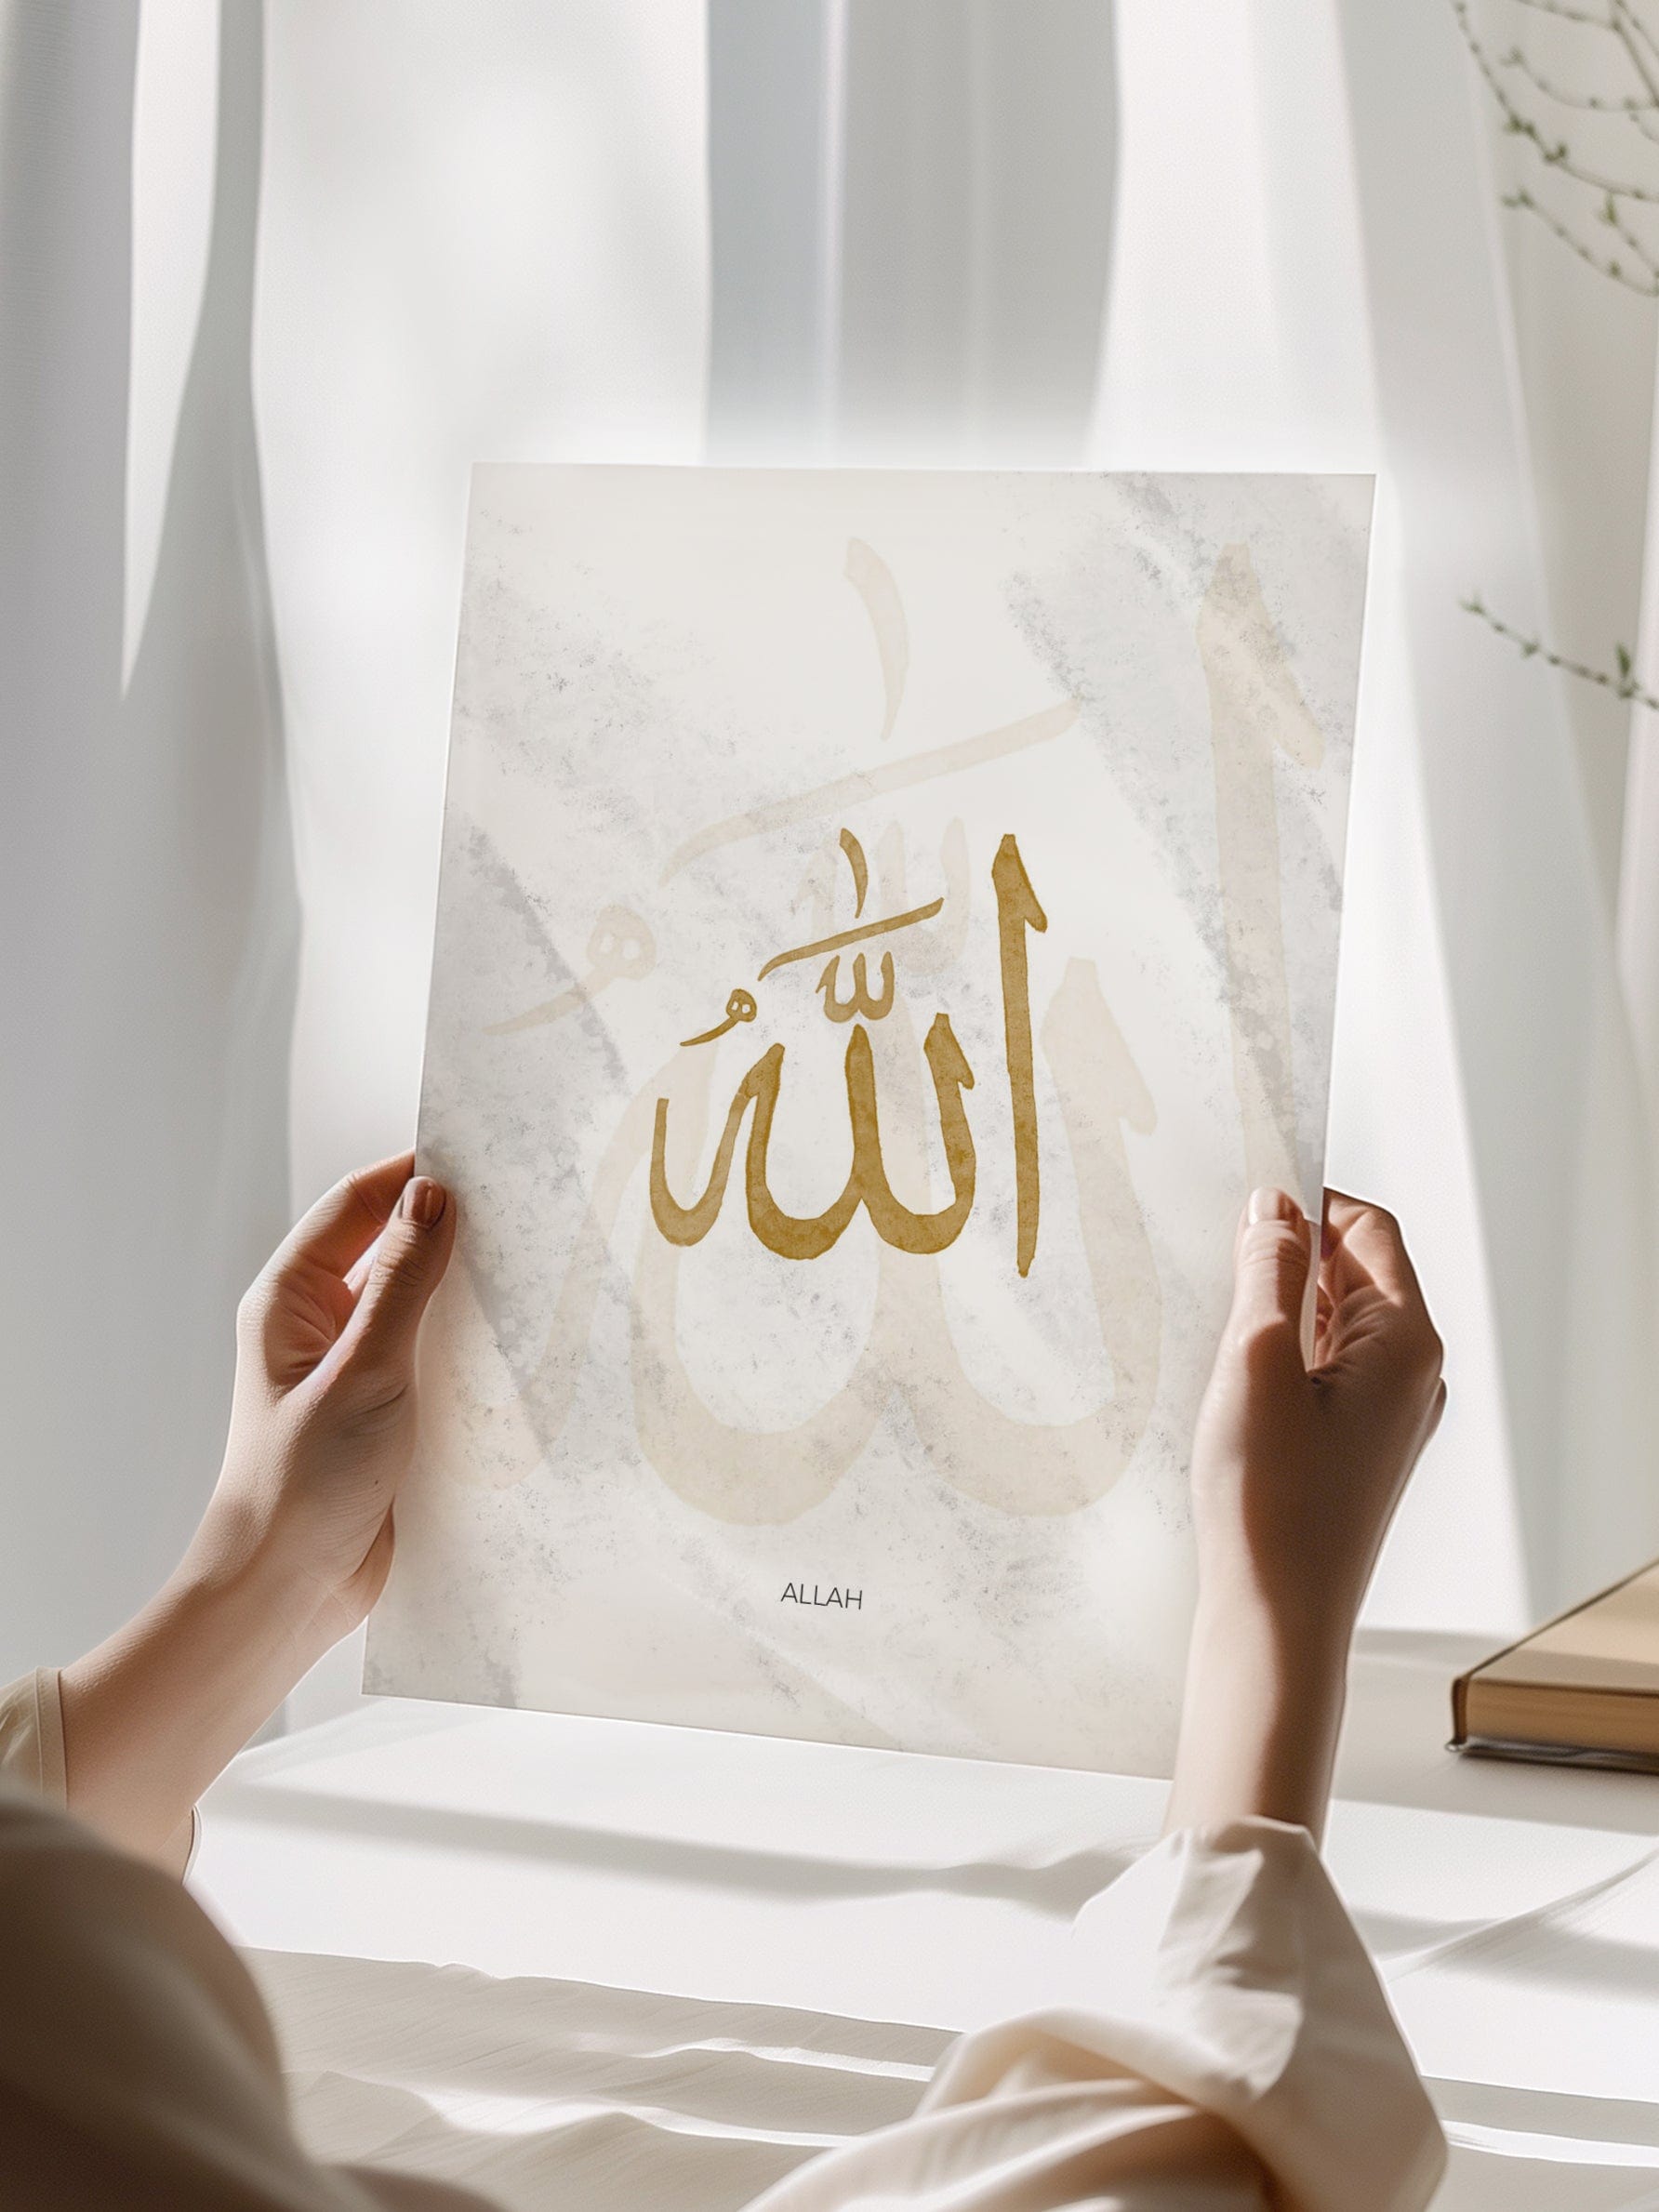 Allah Abstract Poster